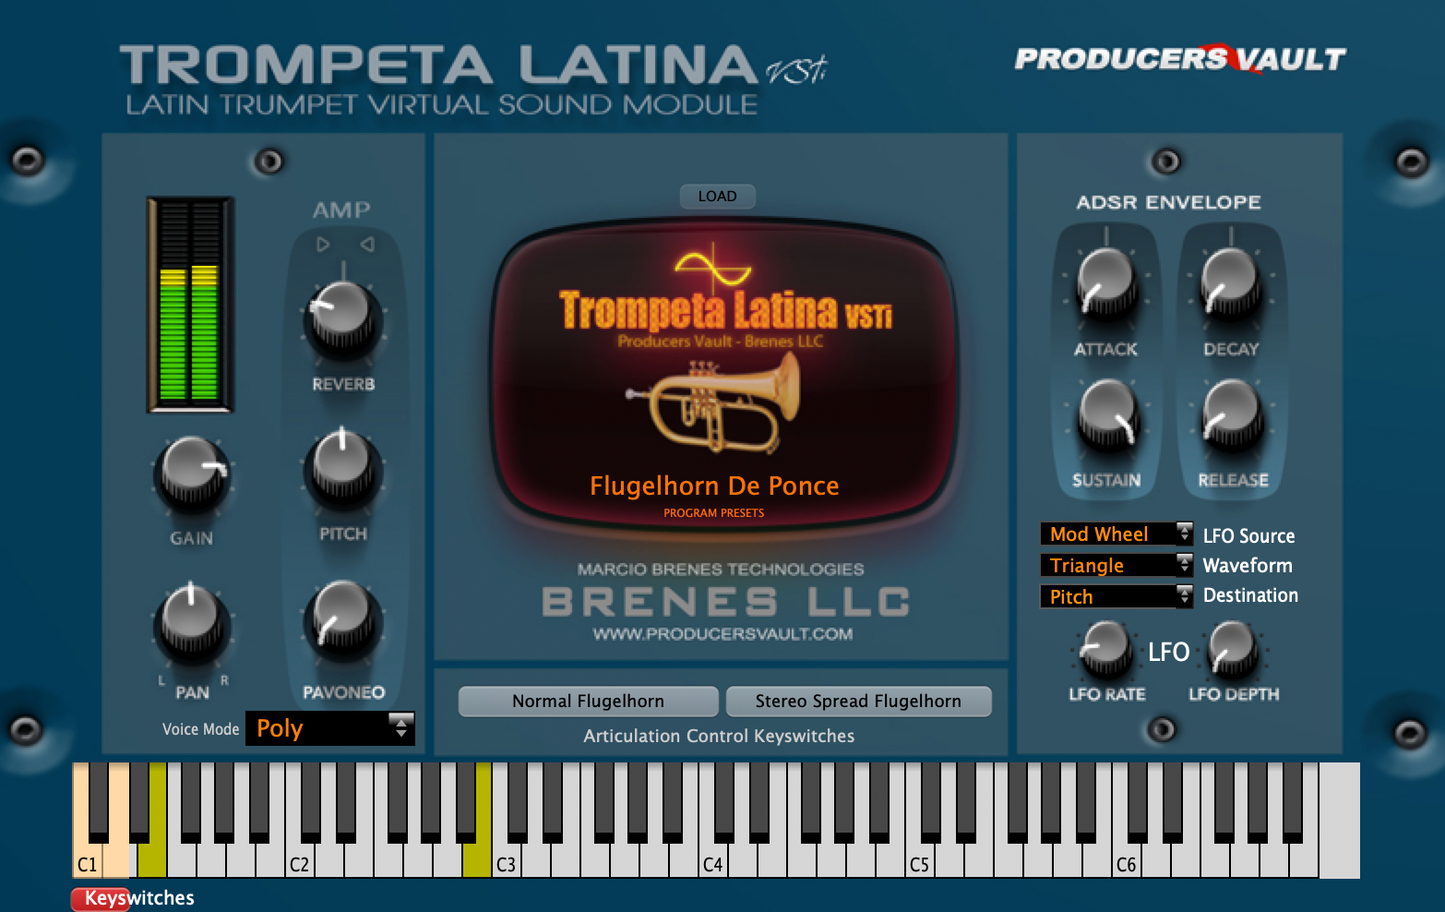 Trompeta Latina VSTi (Windows PC VST plugin)